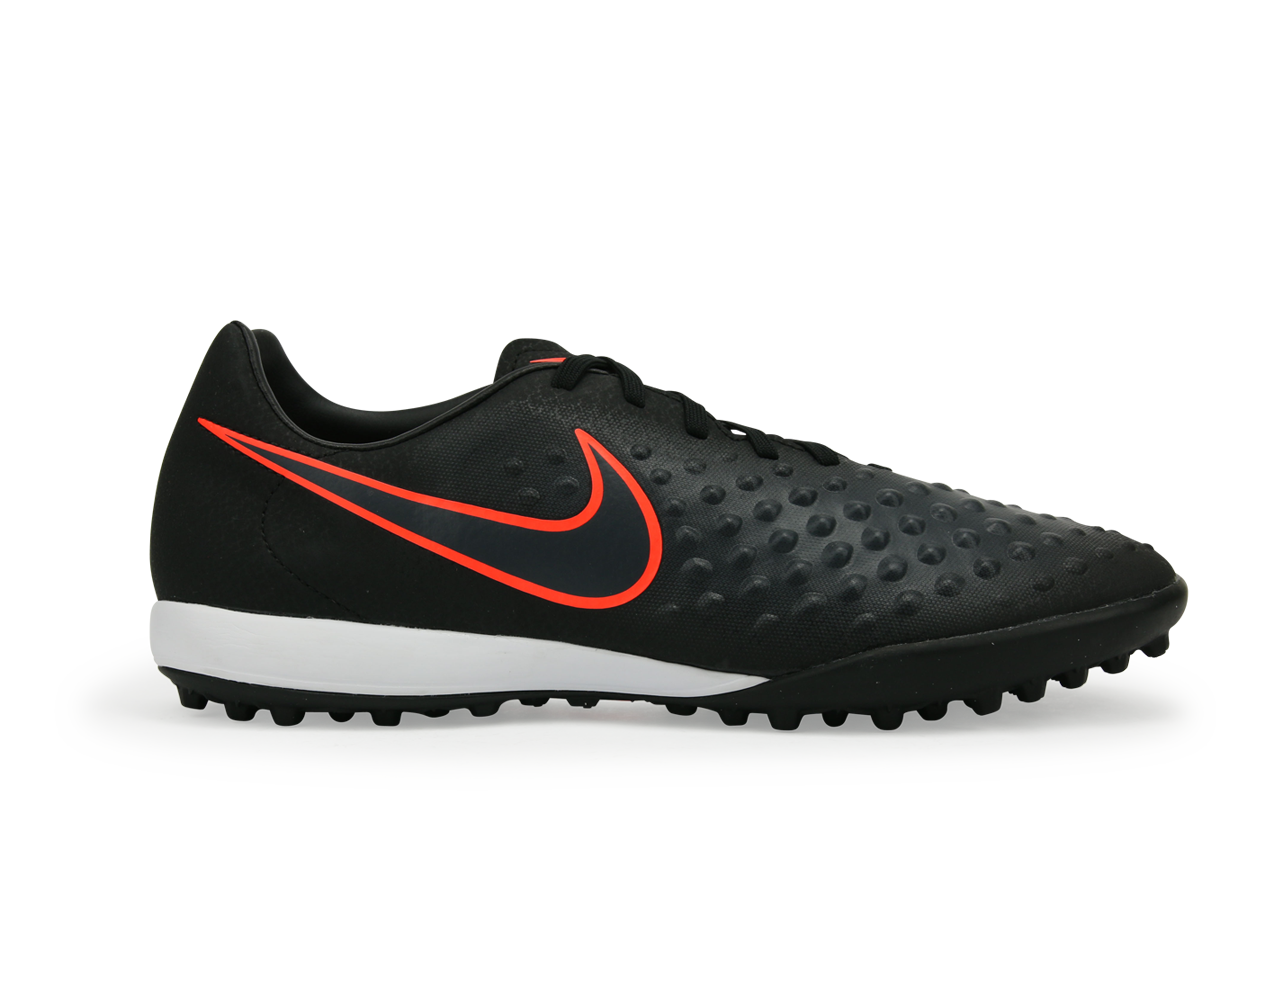 Nike Men's MagistaX Onda II Turf Soccer Shoes Black/Total Crimson